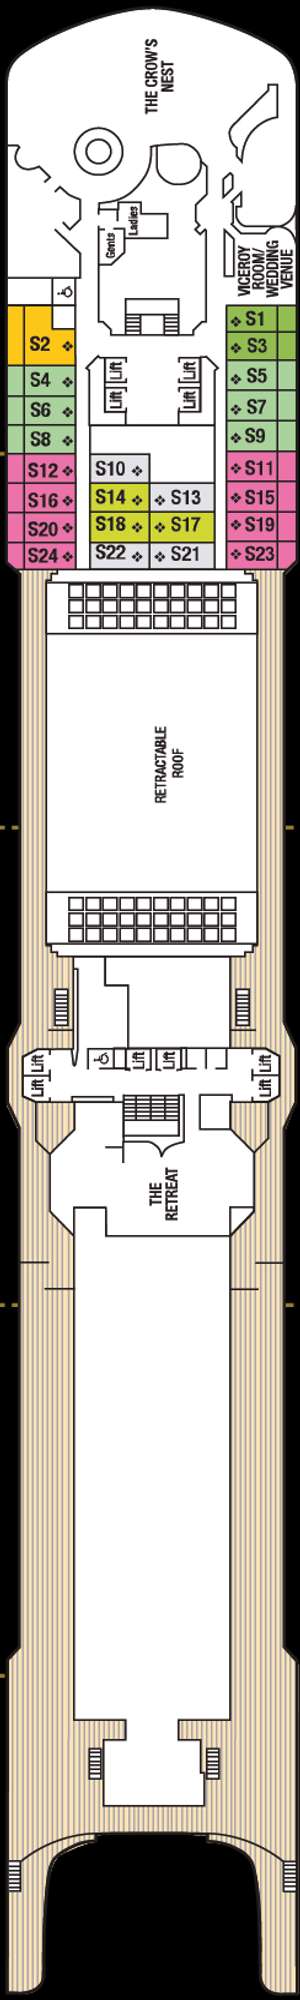 Deck plan for Arcadia